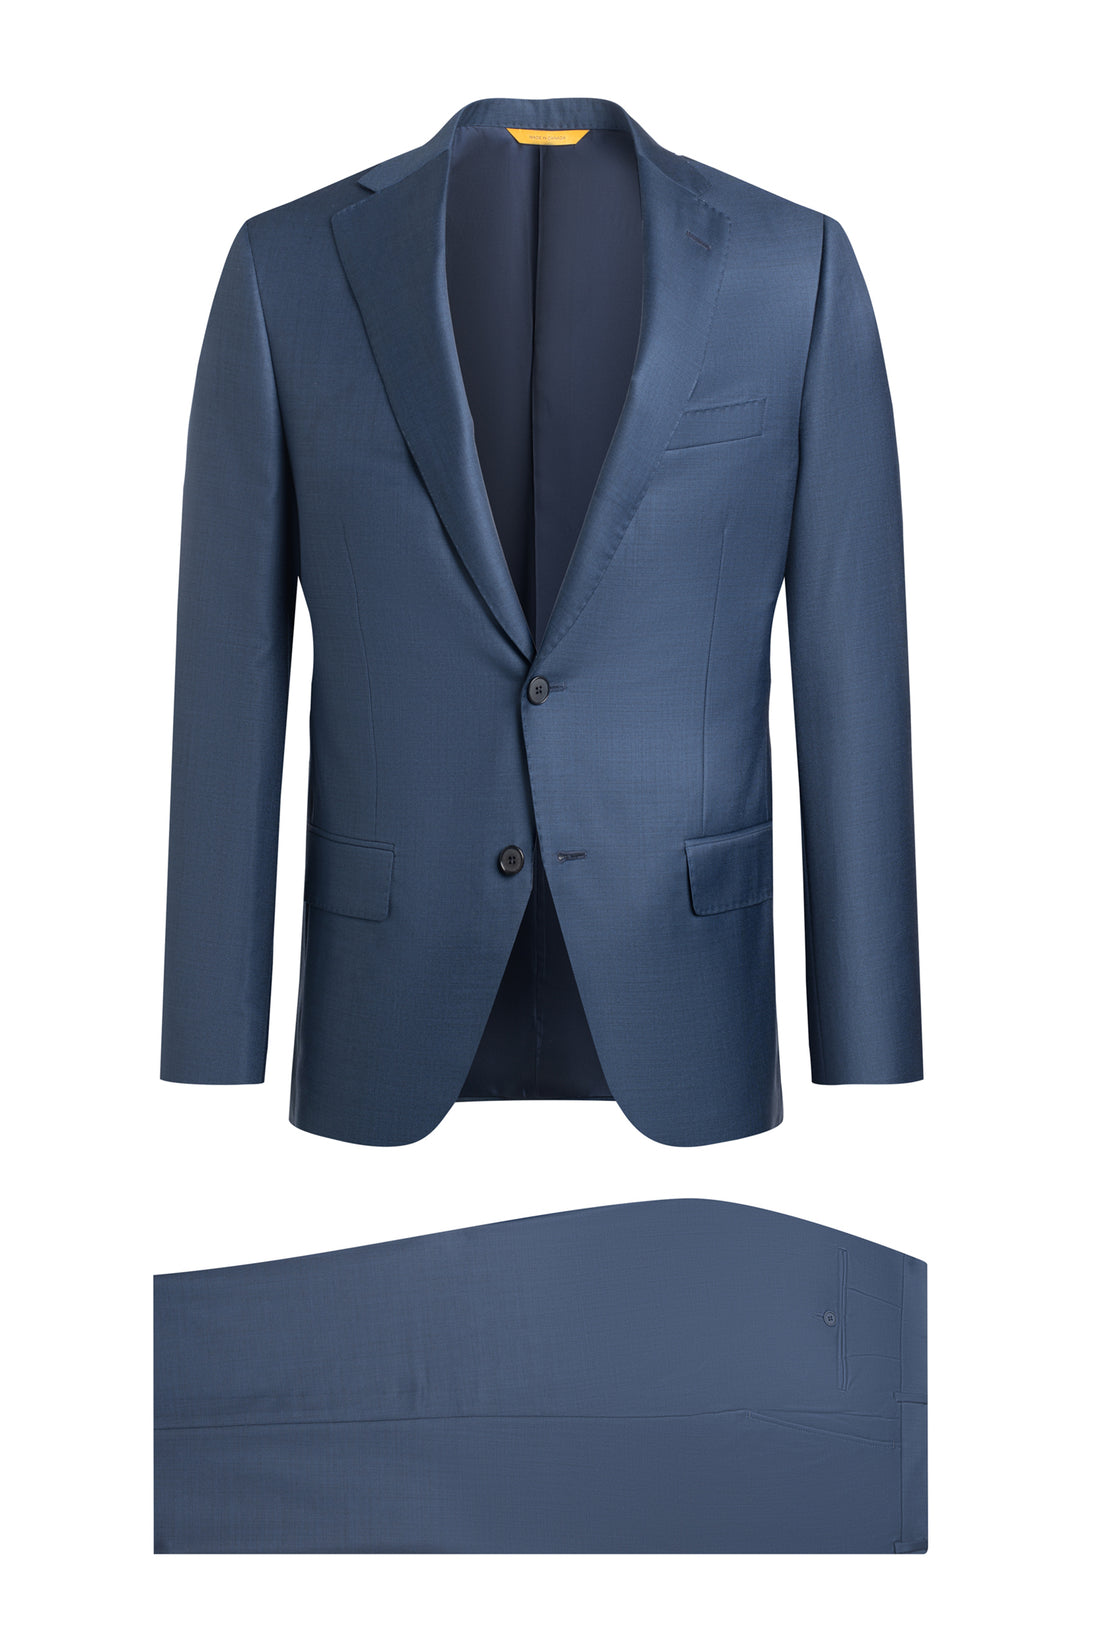 Blue Sharkskin Classic Suit